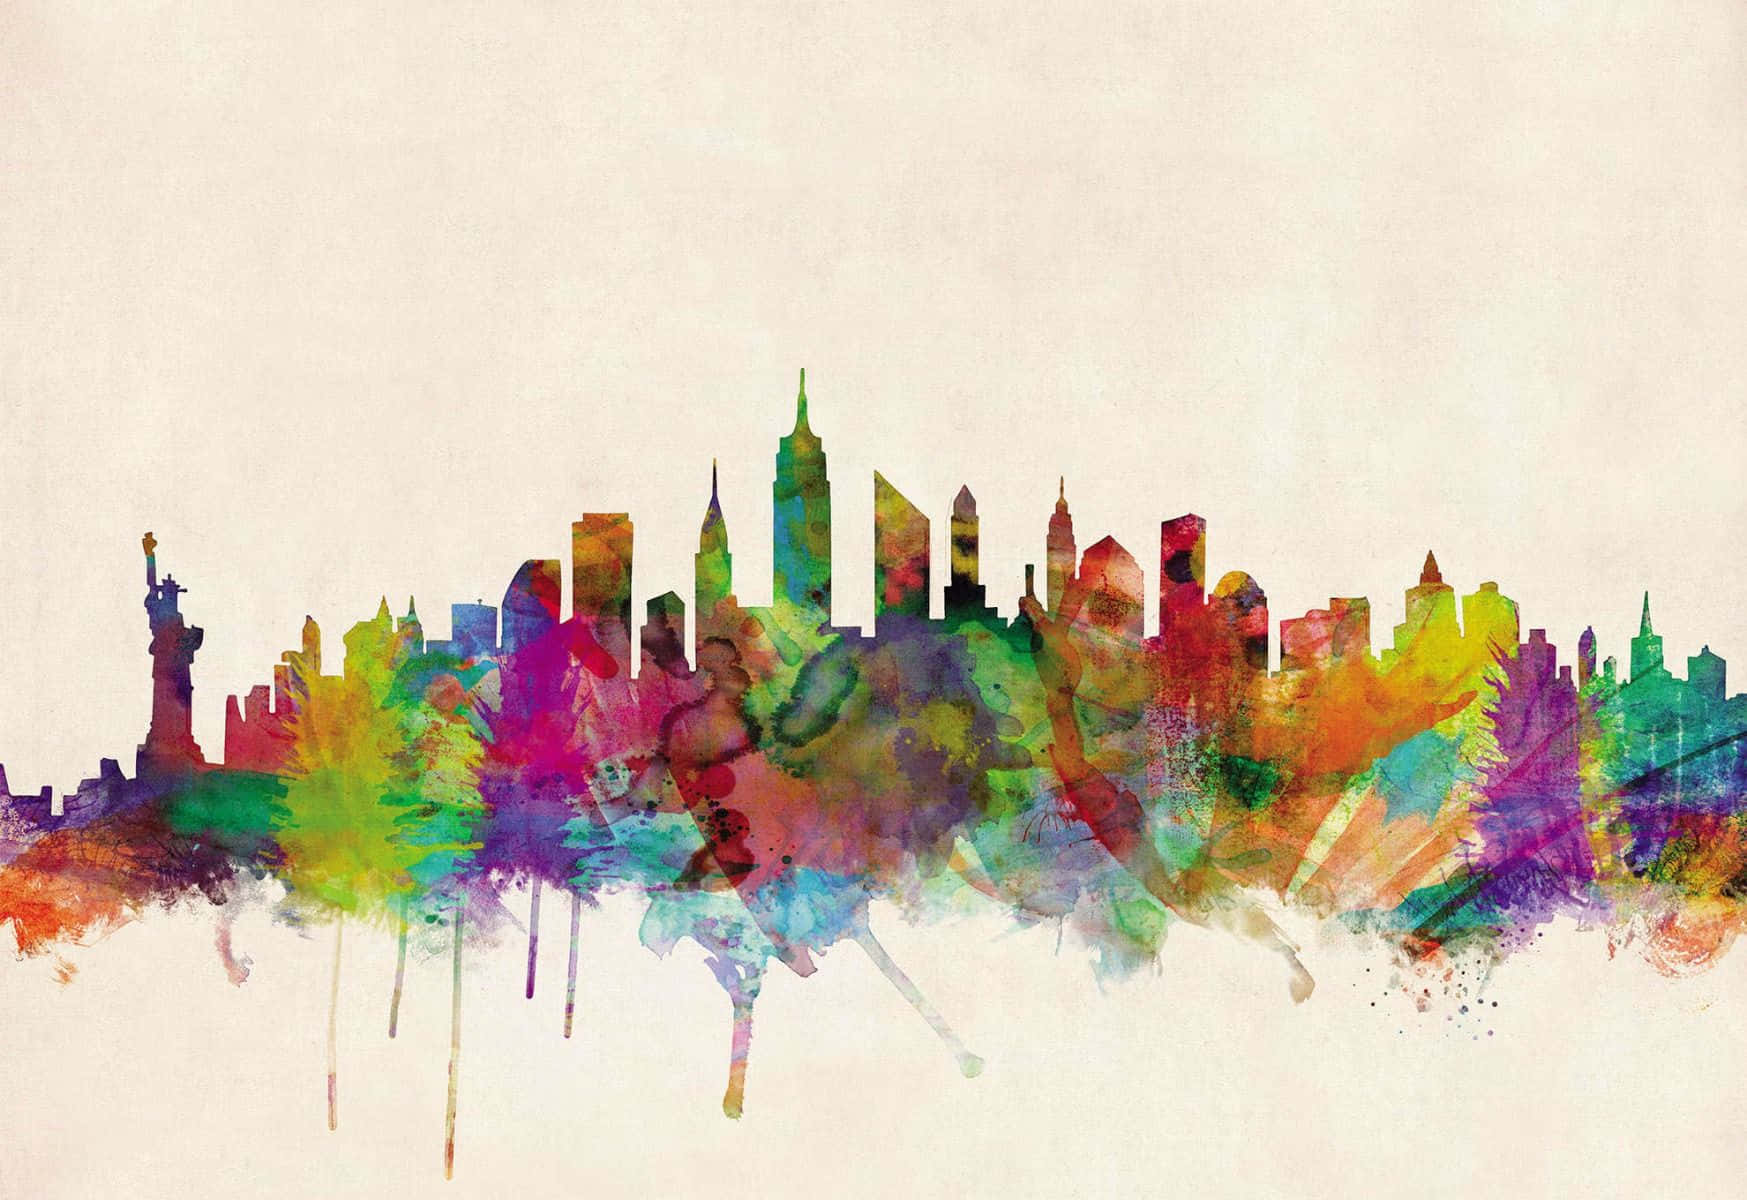 Stunning visage of New York City skyline as seen through artist's eye Wallpaper